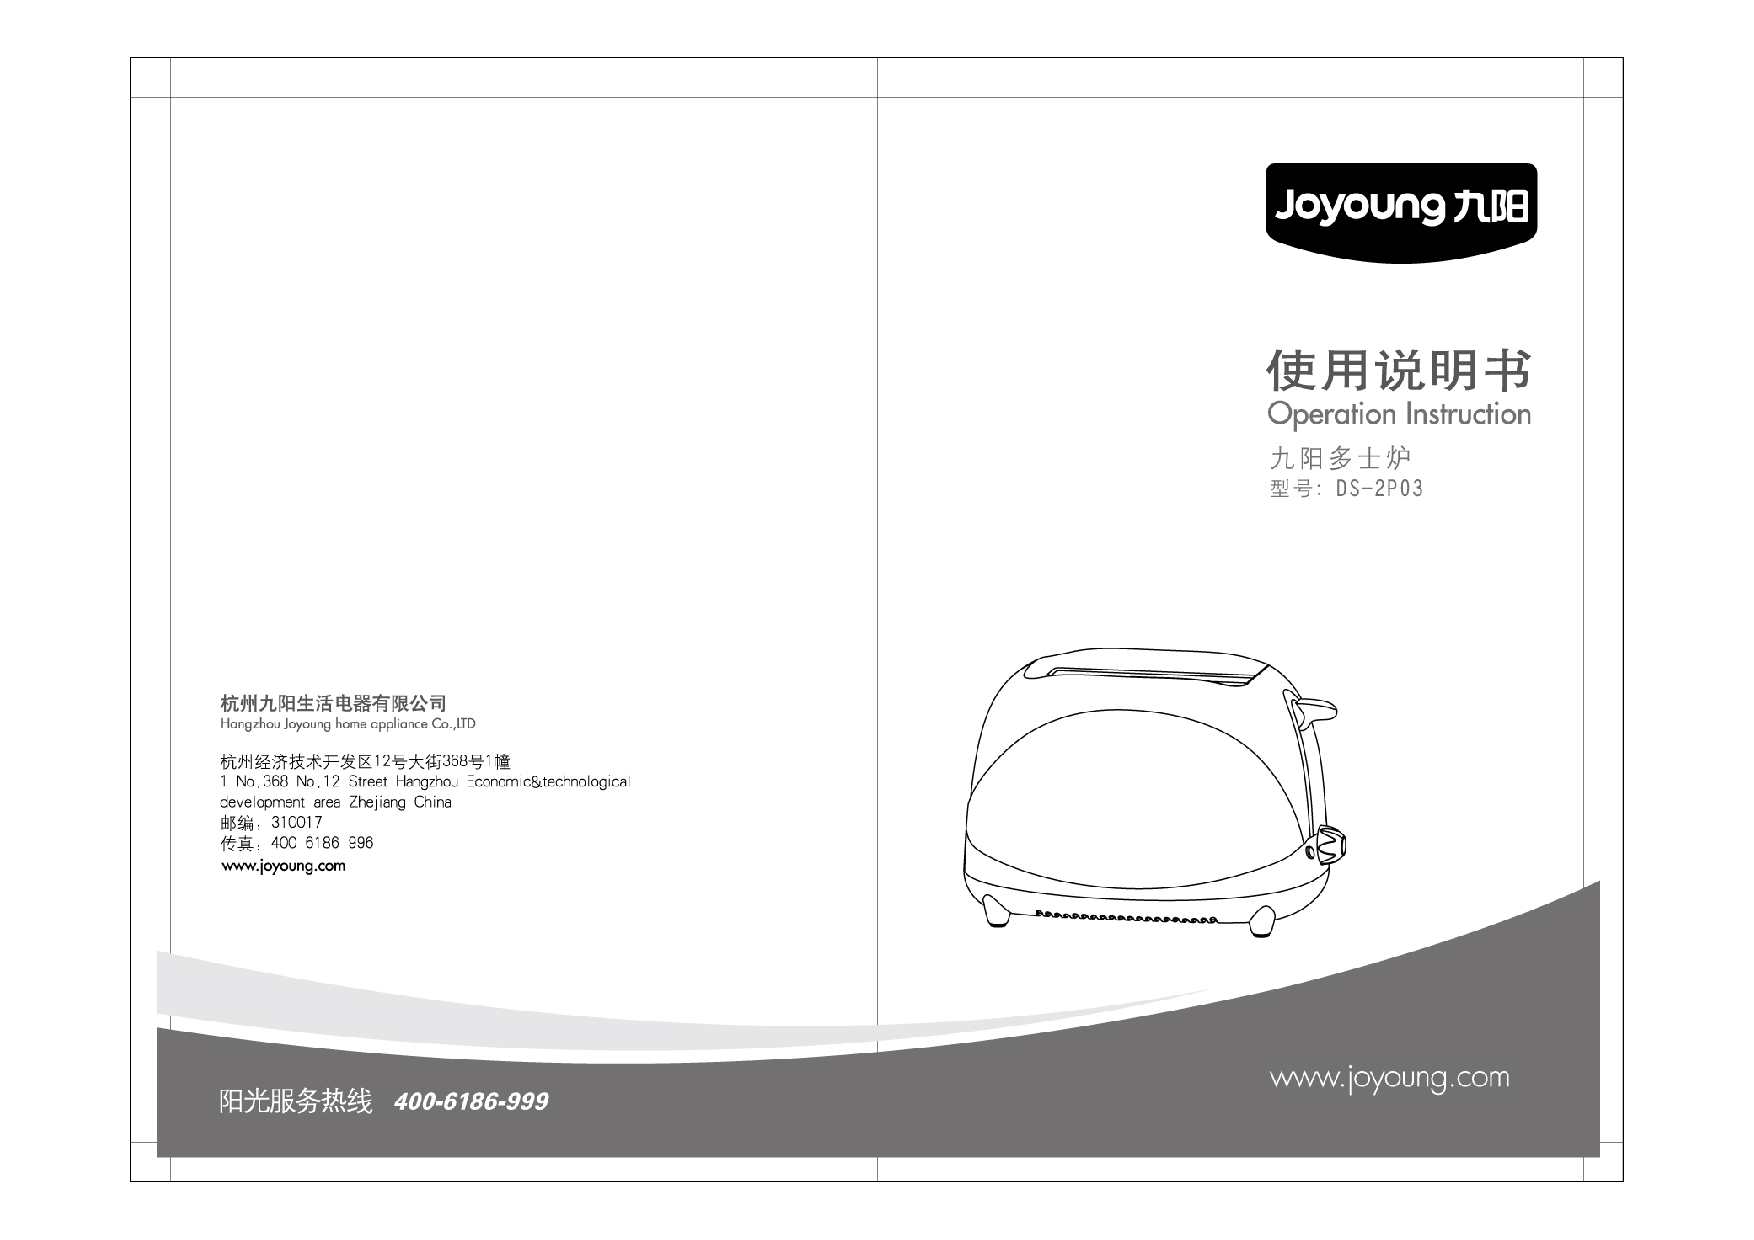 九阳 Joyyoung DS-2P03 使用说明书 封面